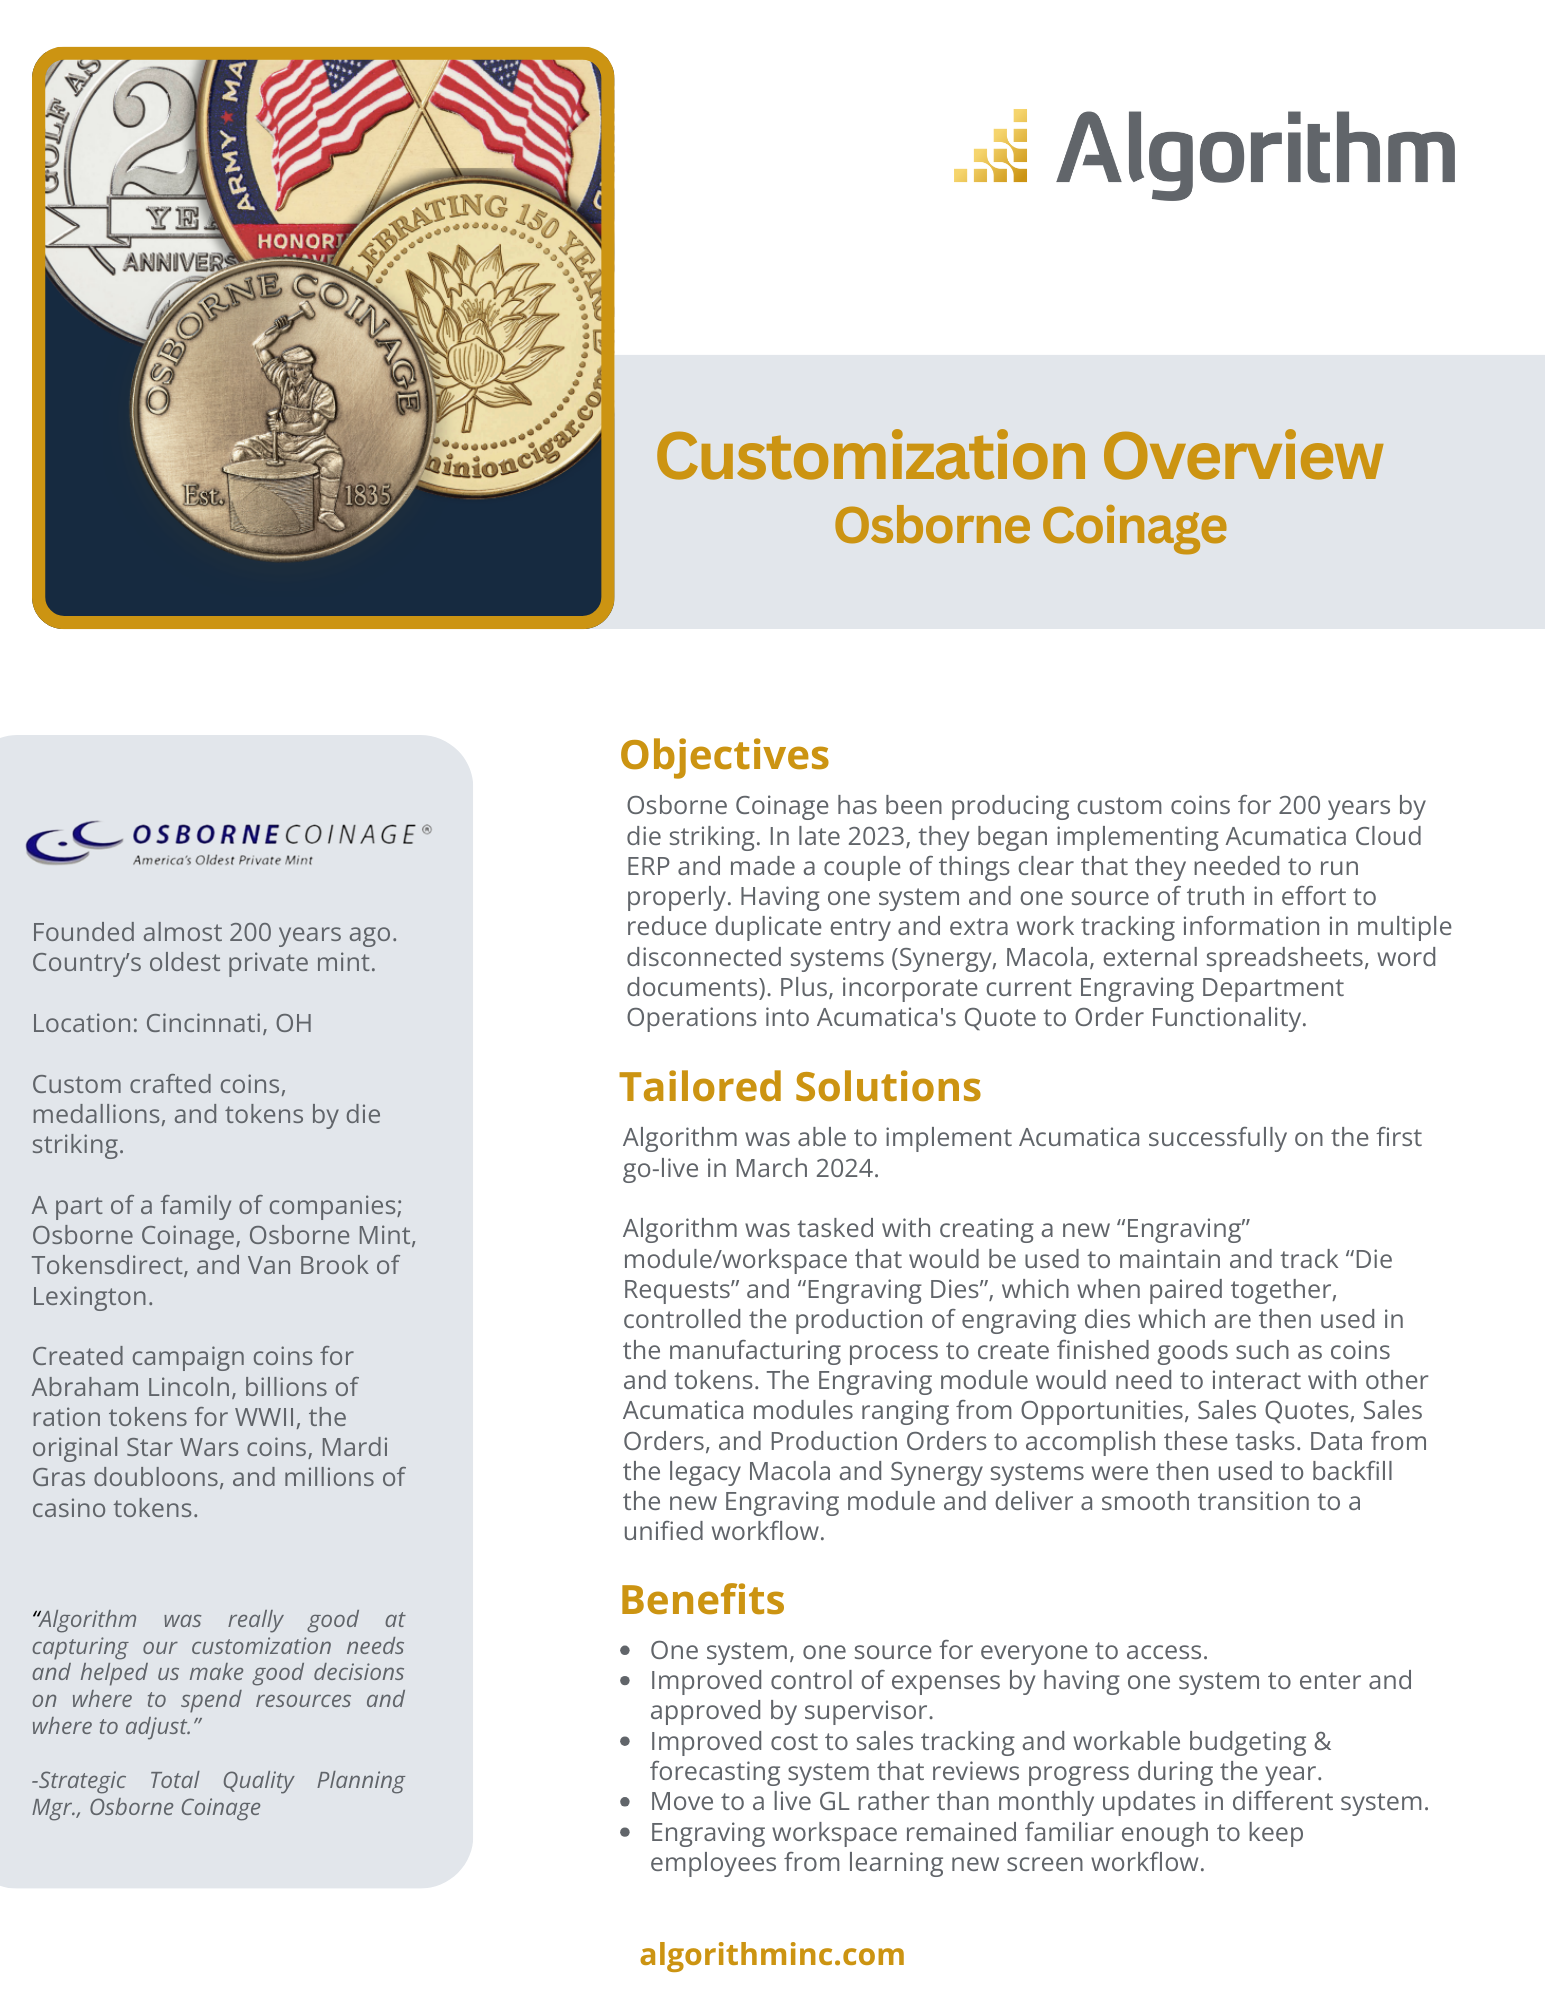 Customization Overview: Osborne Coinage